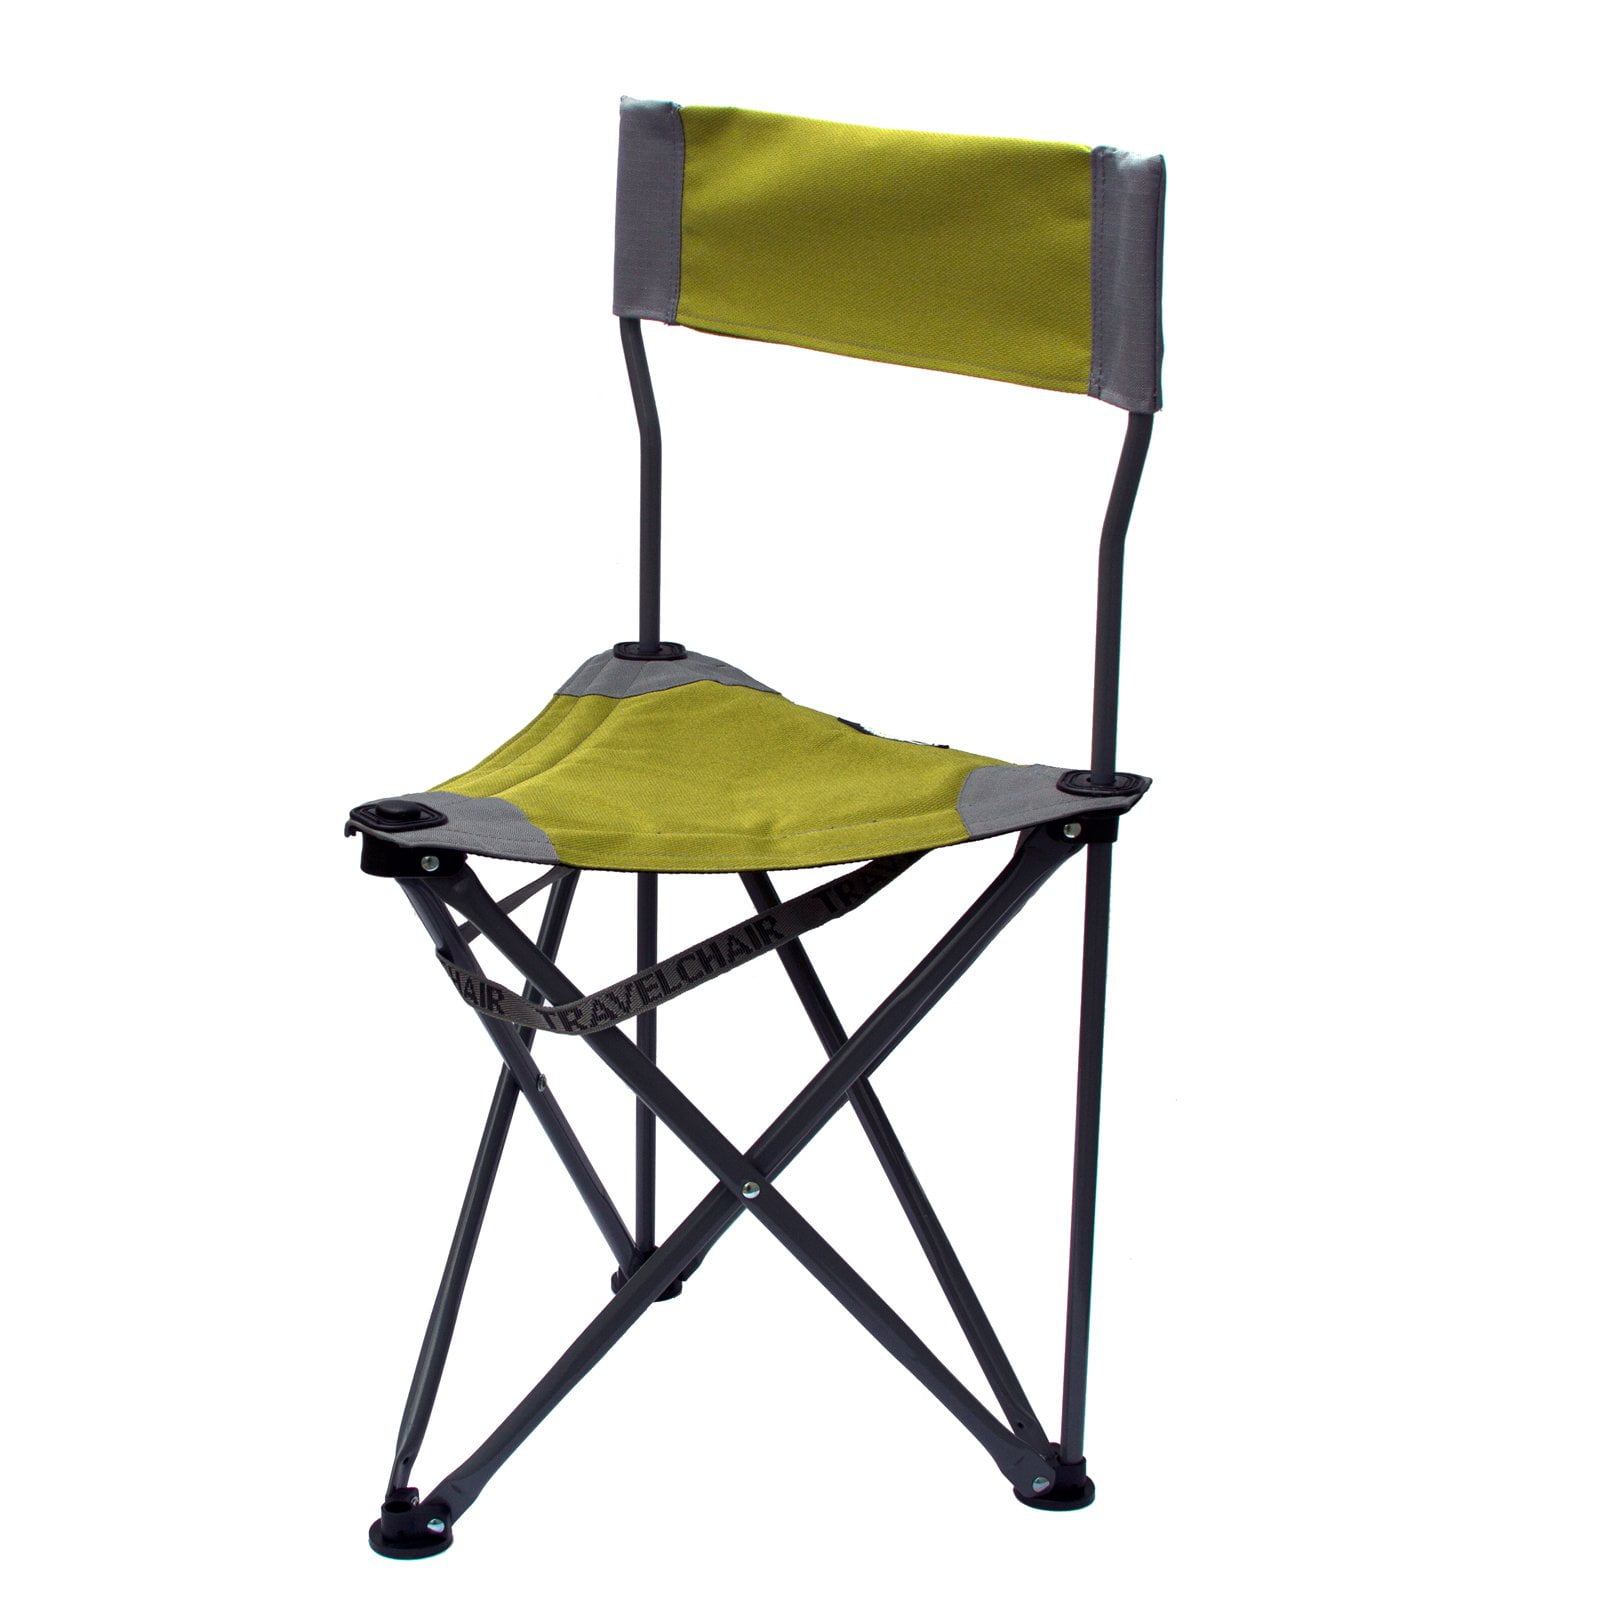 Travelchair Wingshooting Slacker Chair Light Camo Hunting Pockets Portable 